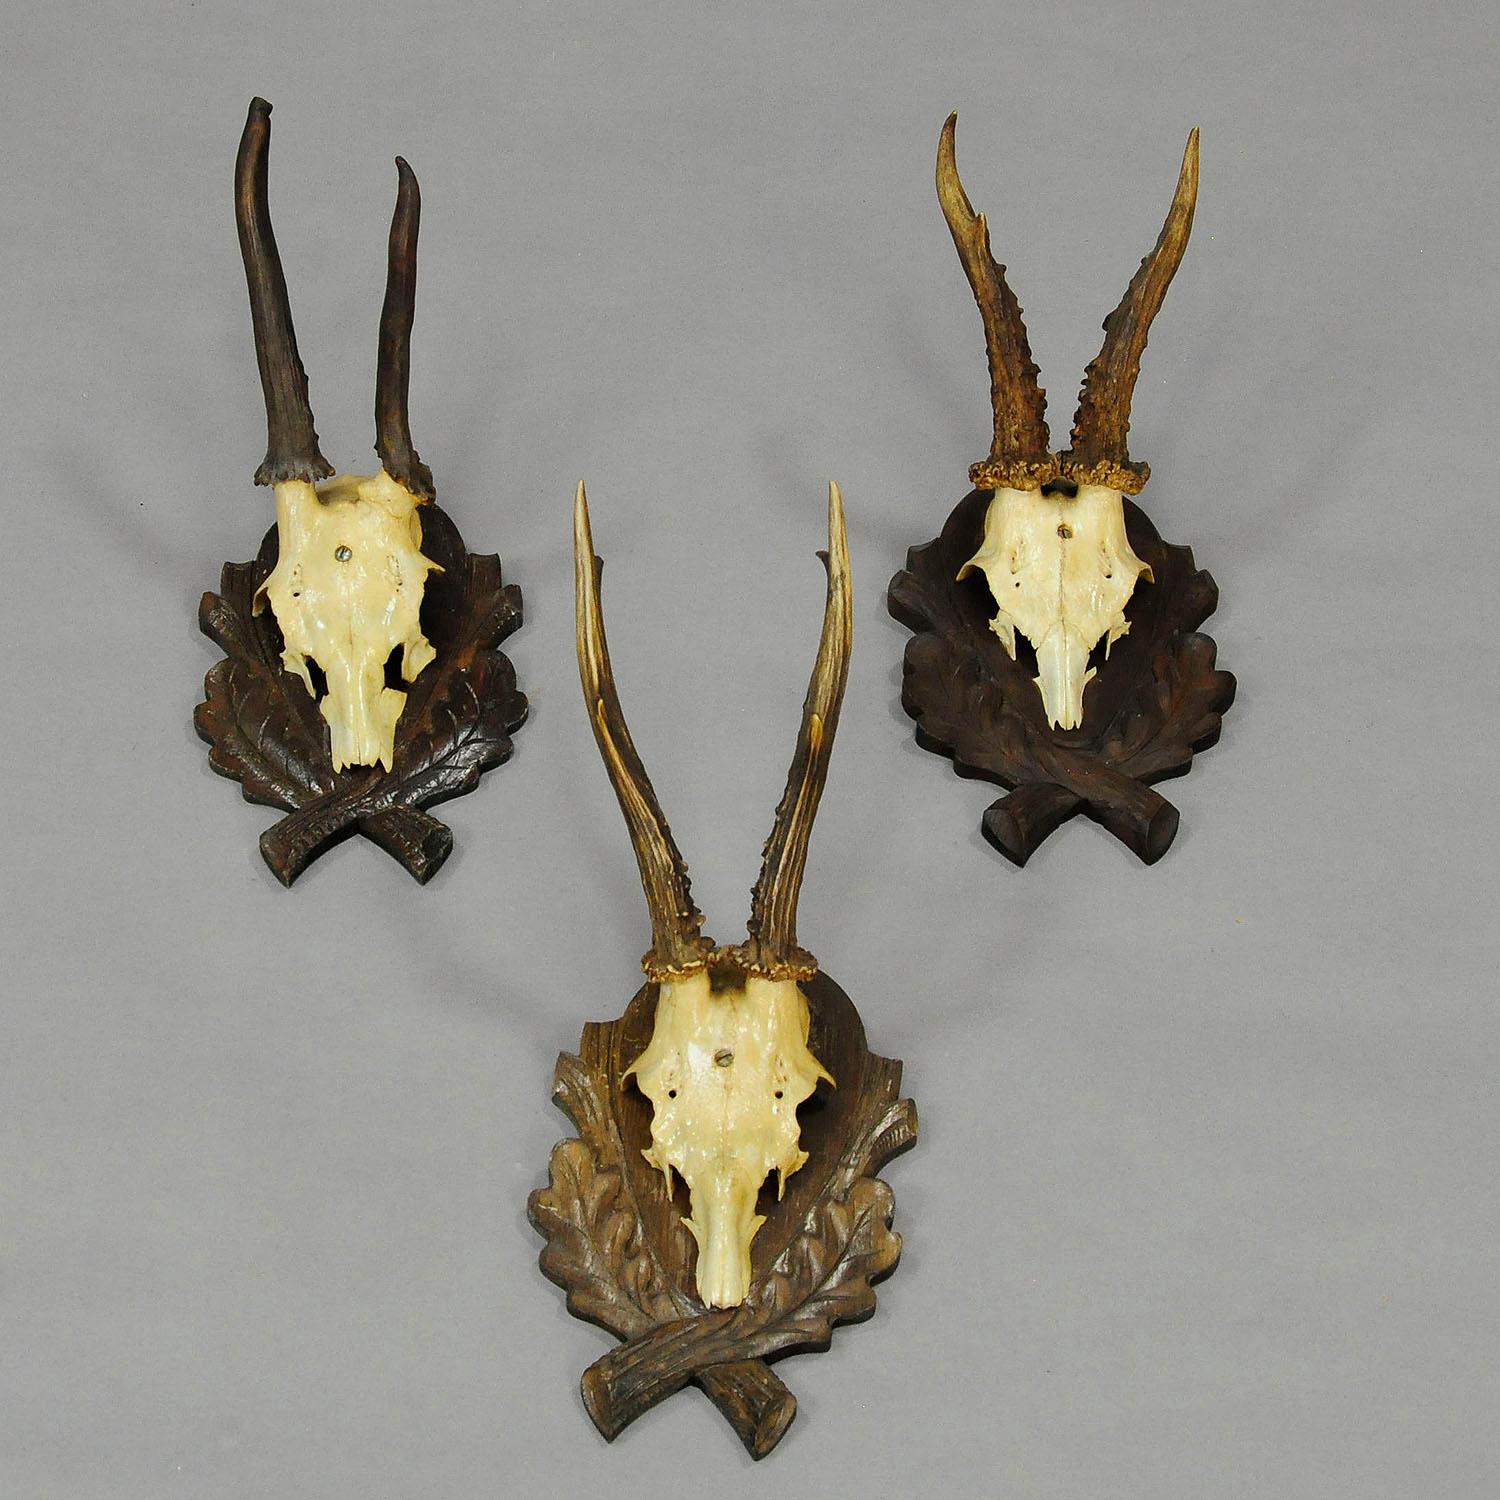 Rustic Six Large Vintage Deer Trophies on Wooden Carved Plaques